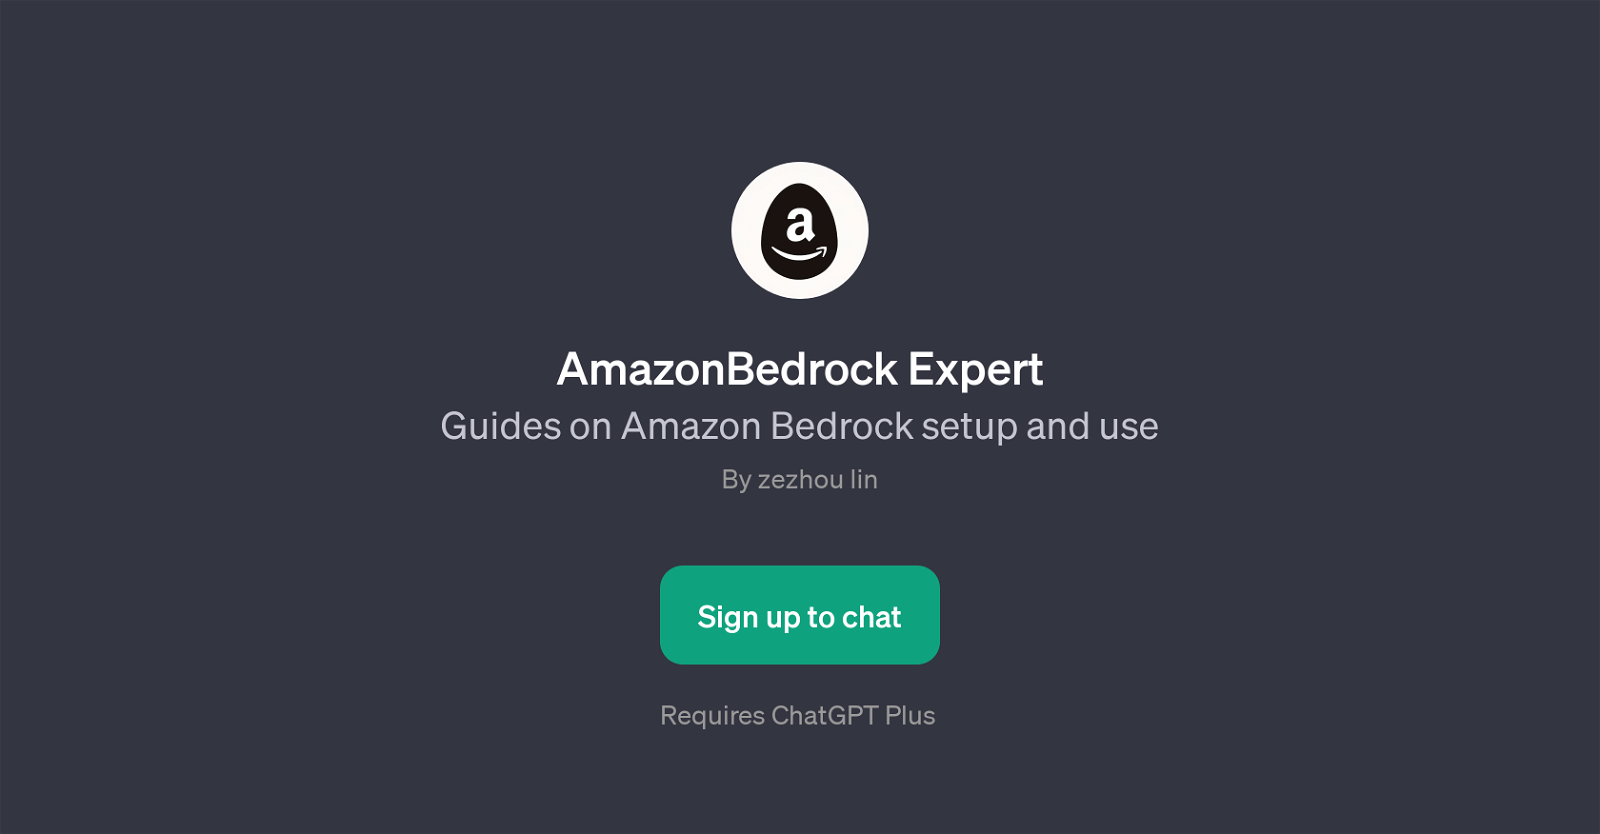 AmazonBedrock Expert website